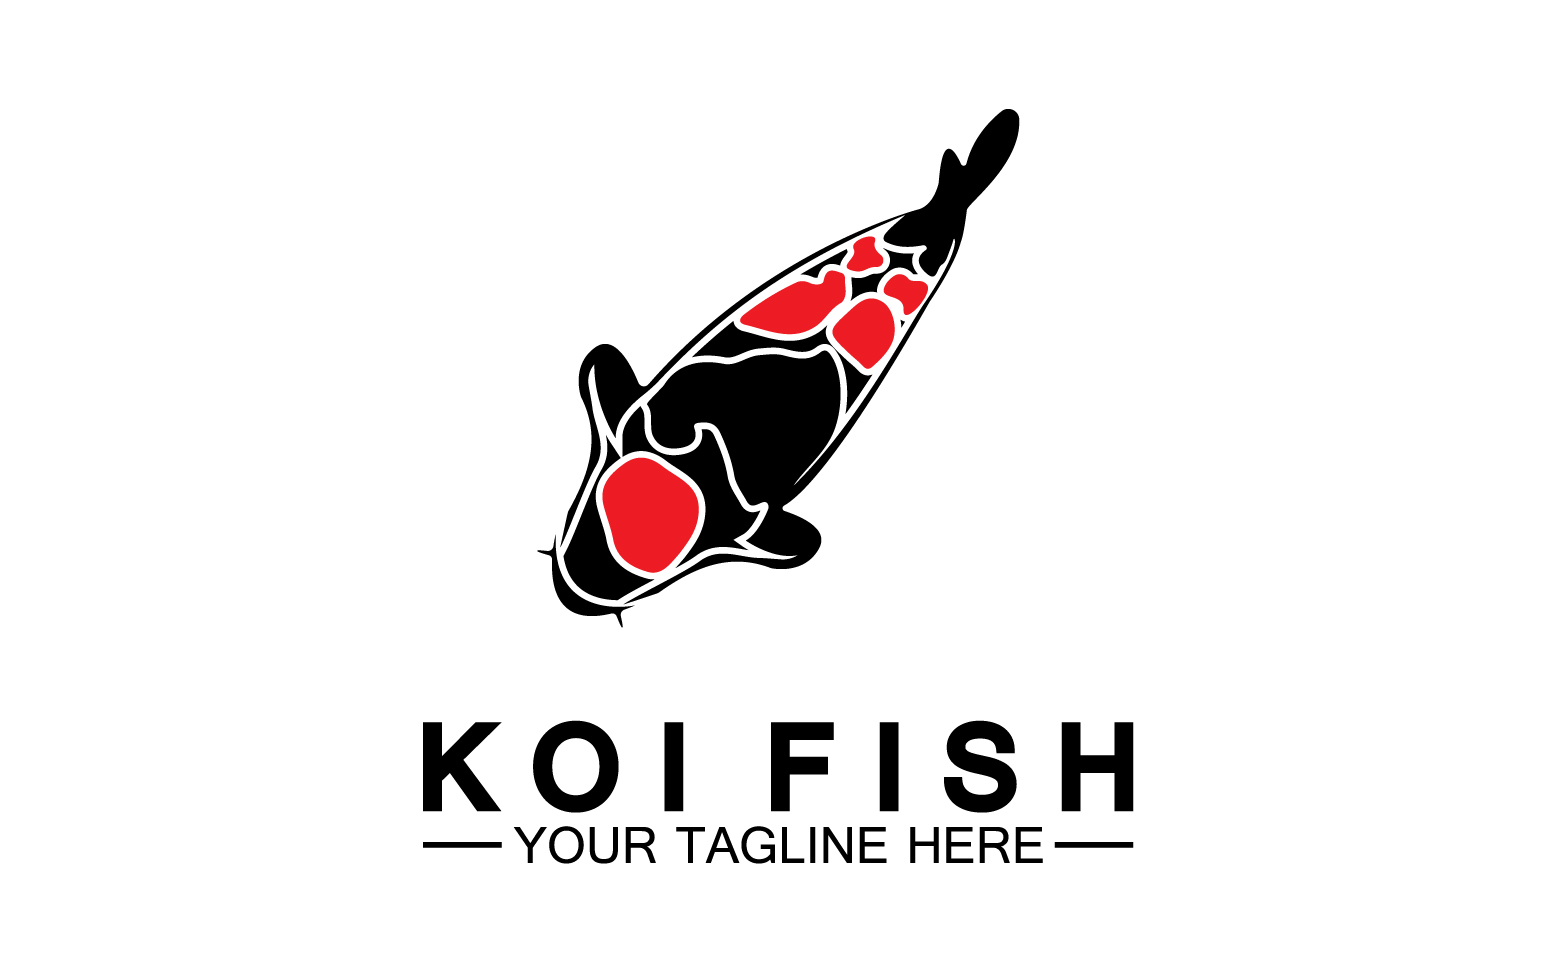 Fish koi black and red icon logo vector v1